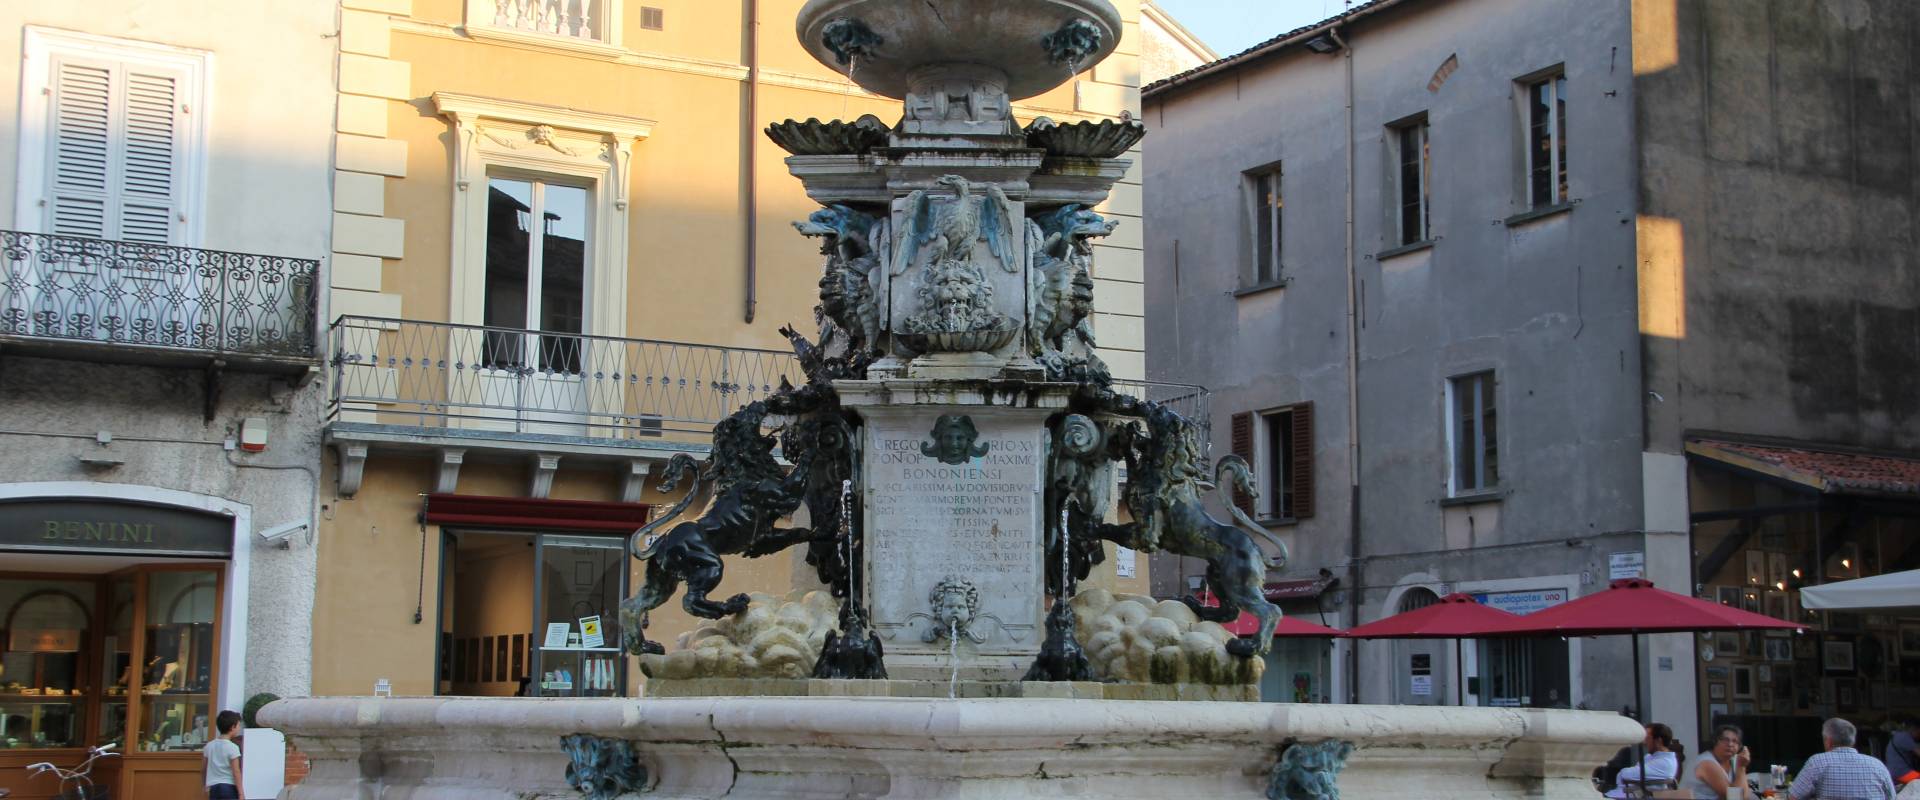 Faenza, fontana monumentale (01) photo by Gianni Careddu